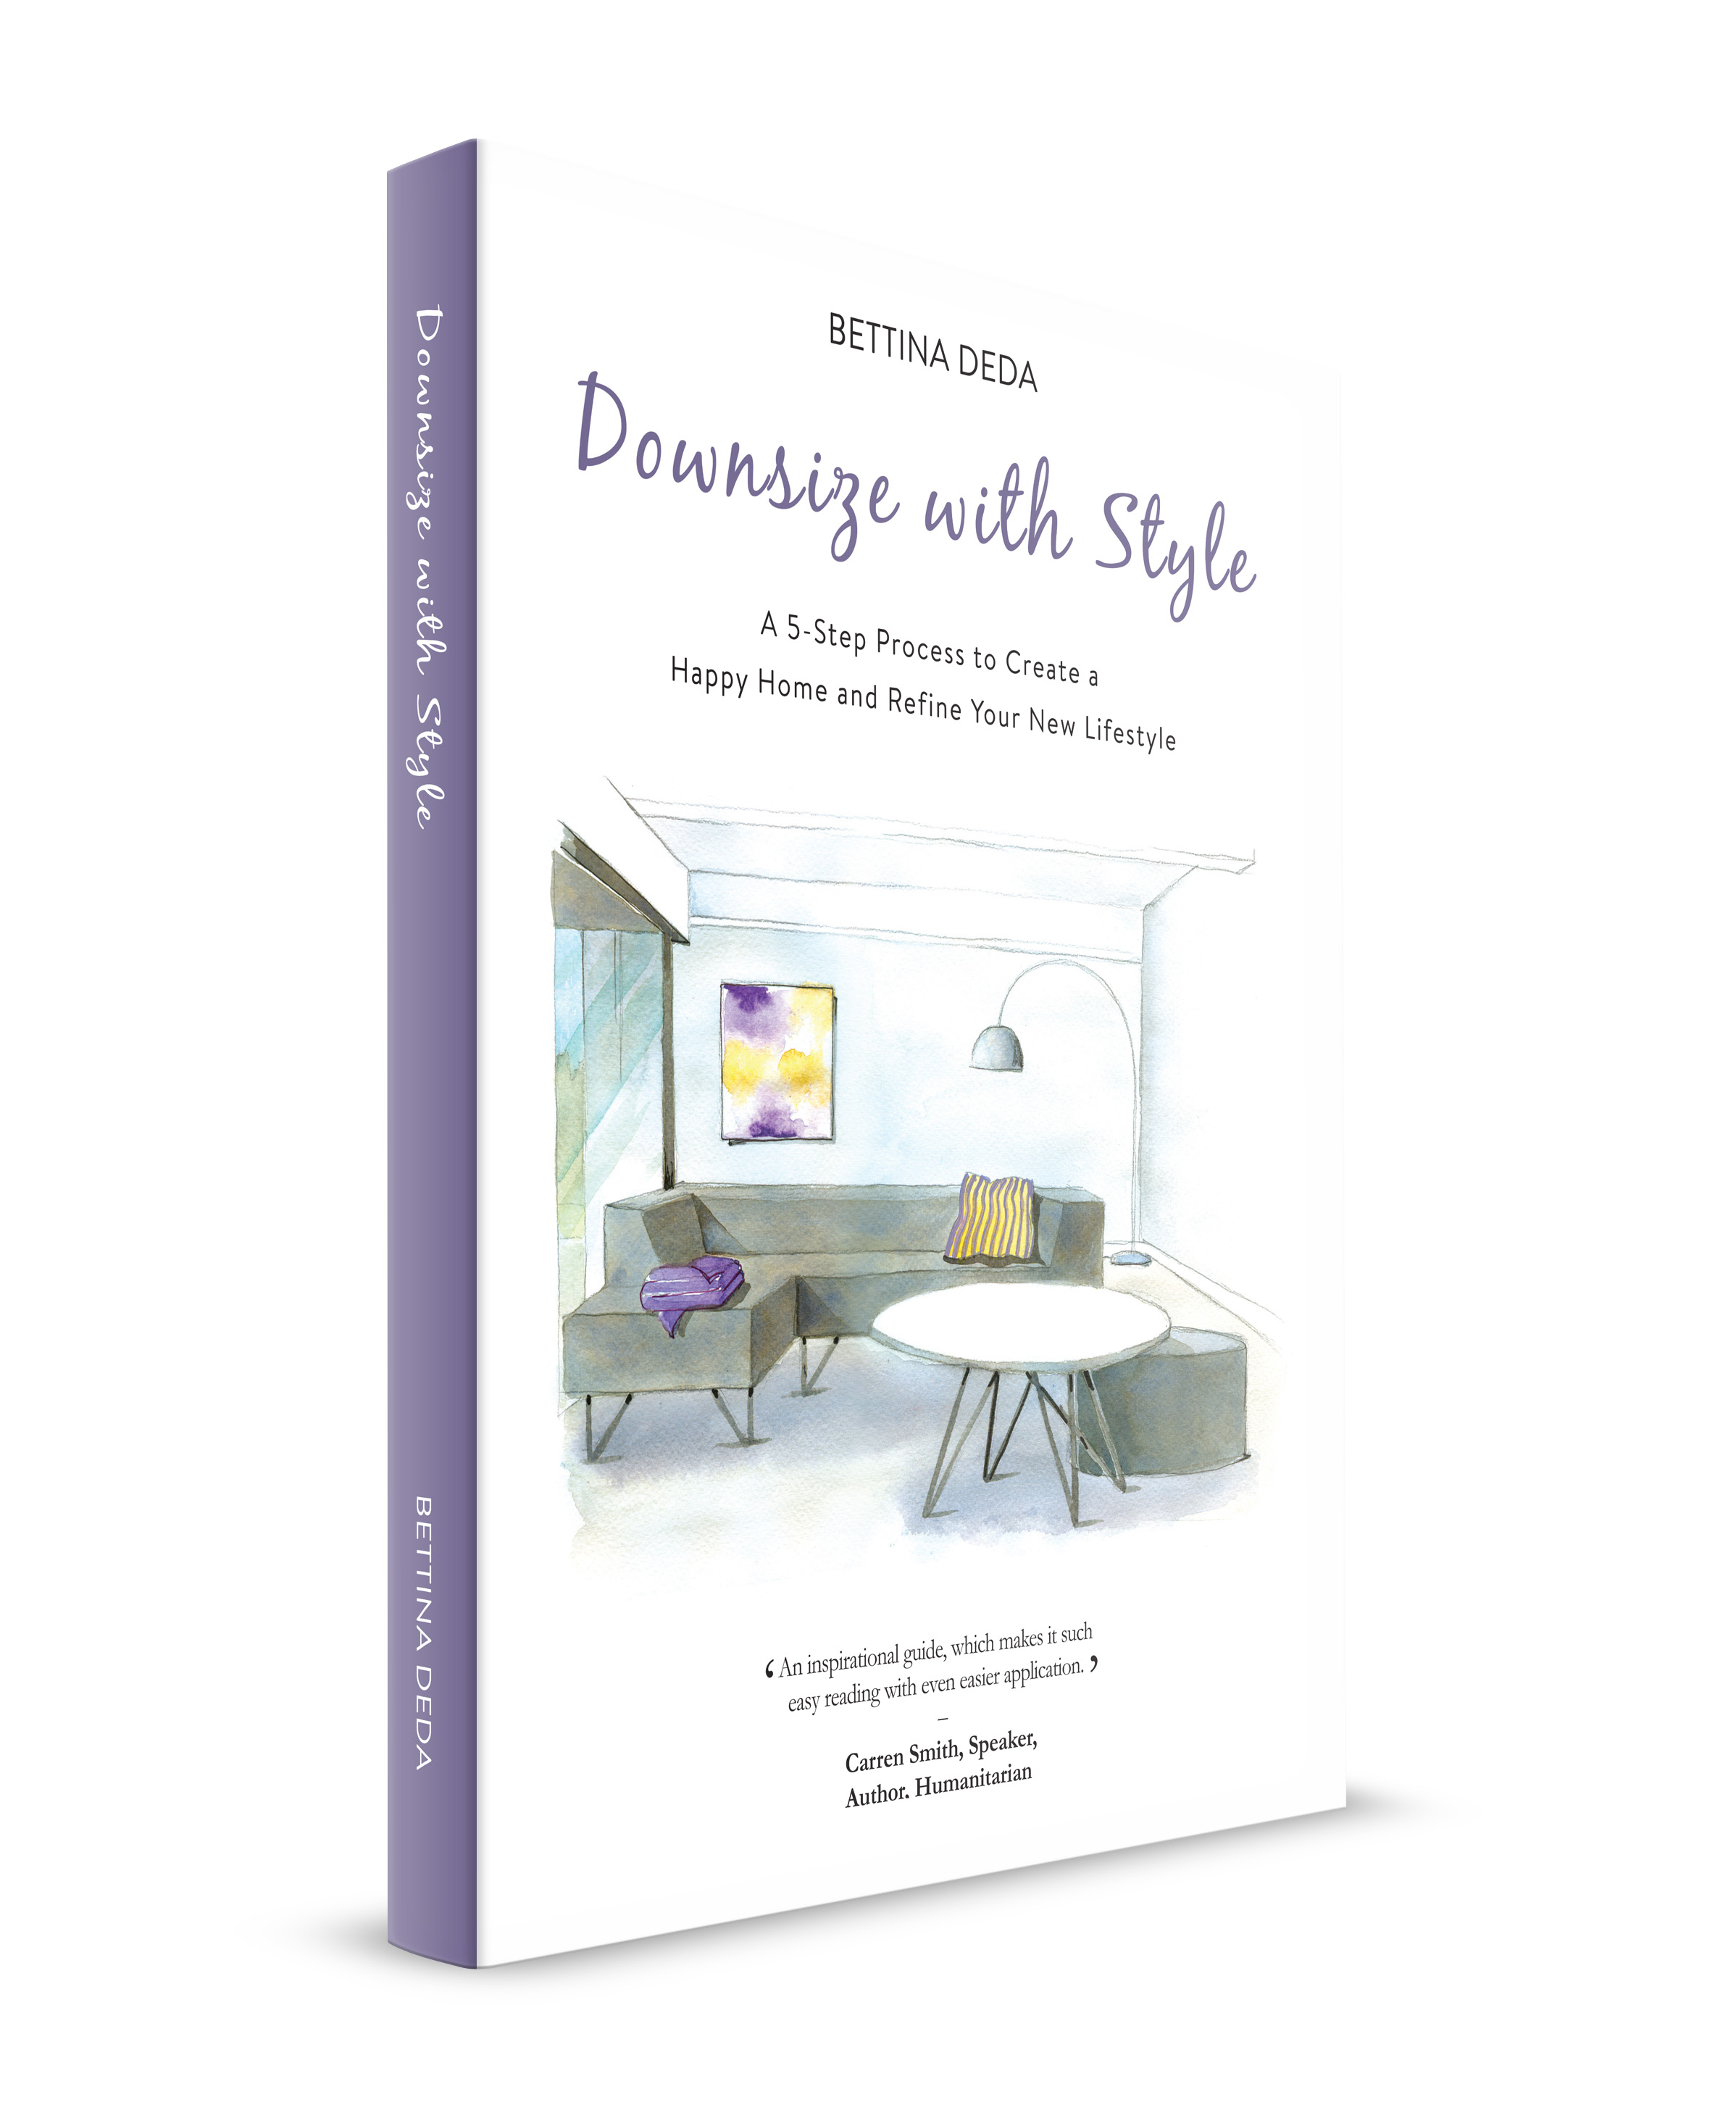 downsize-with-style-bettina-deda-home-downsizing-interior-design-advice